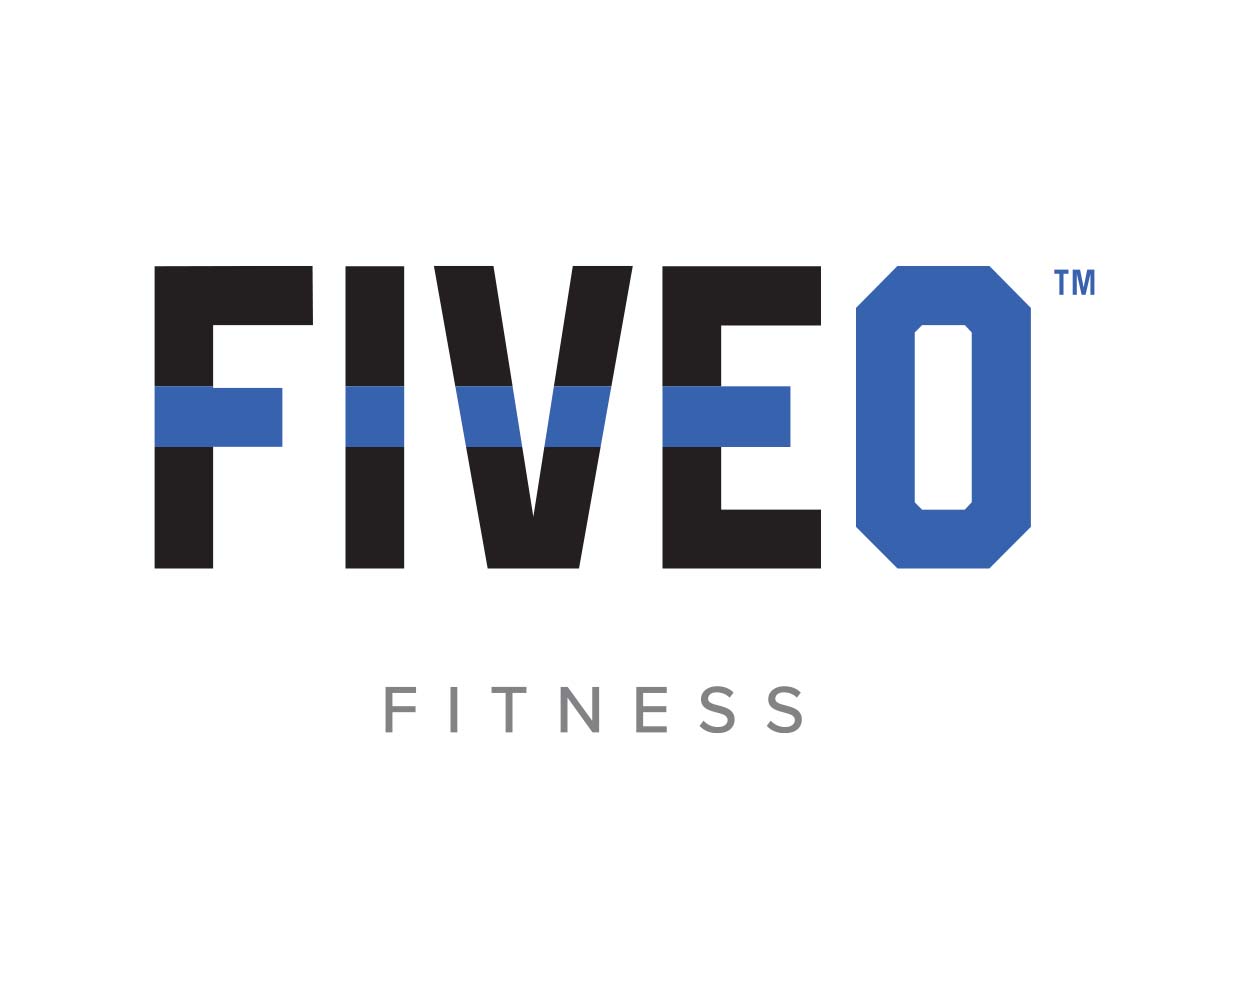 Five0 Fitness Logo